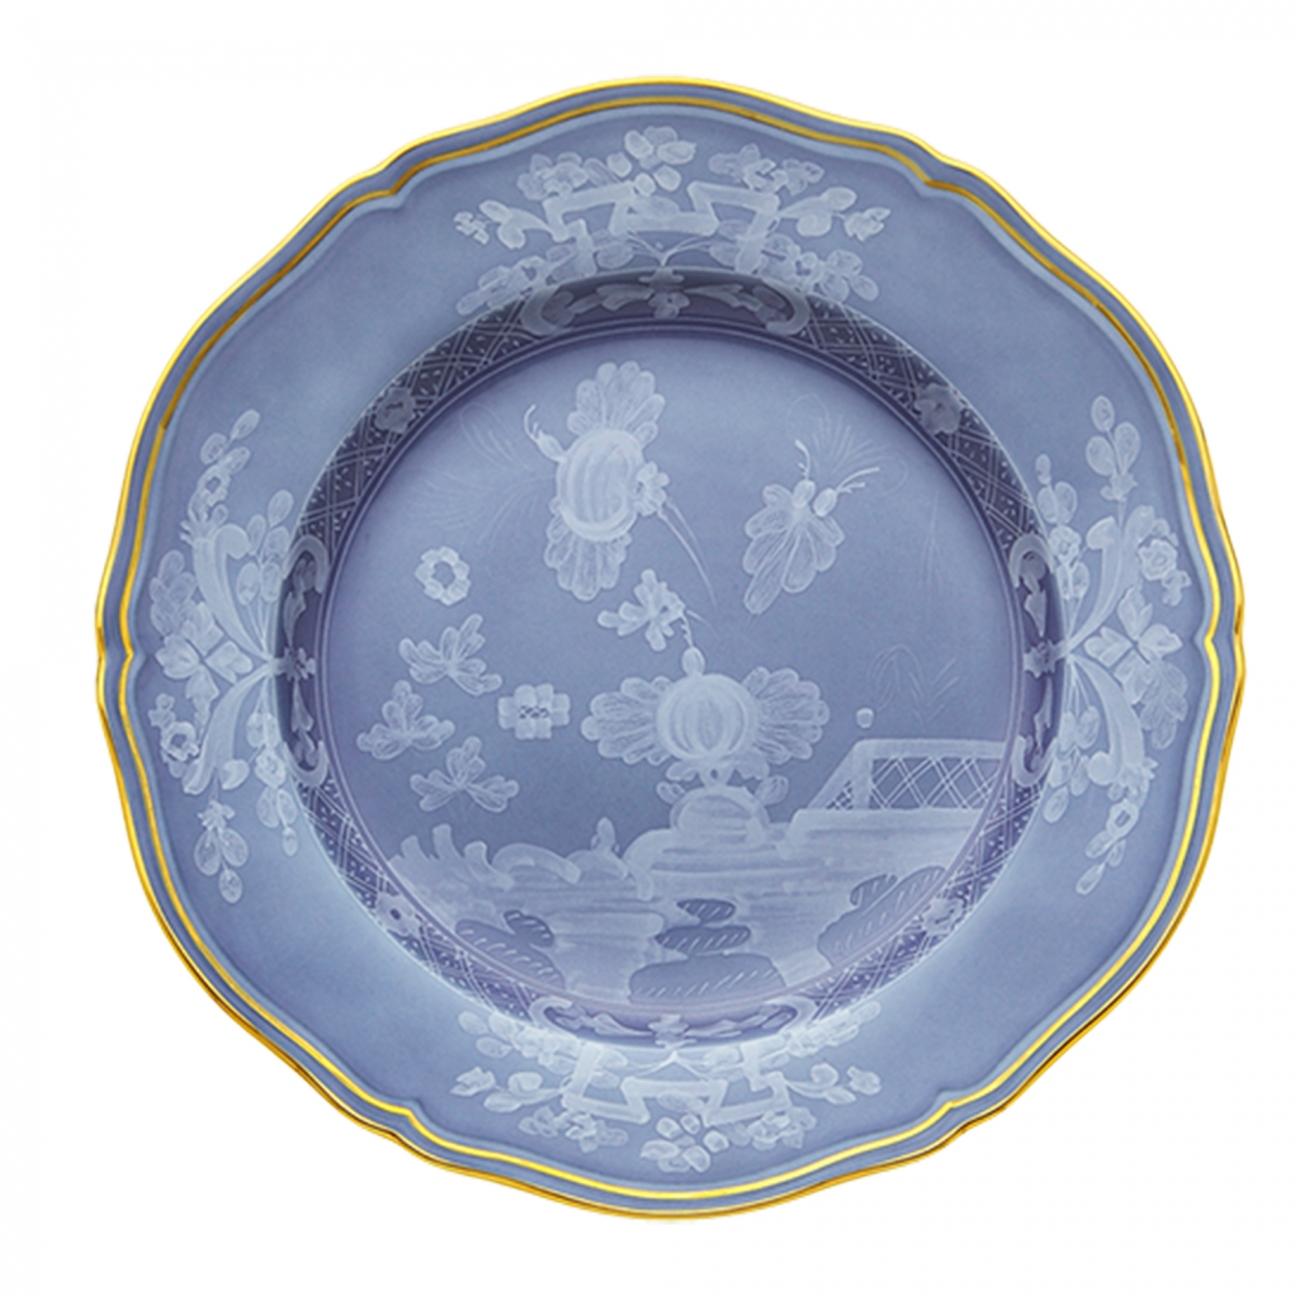 Ginori 1735 Oriente Italiano Dinner plate Set of 2